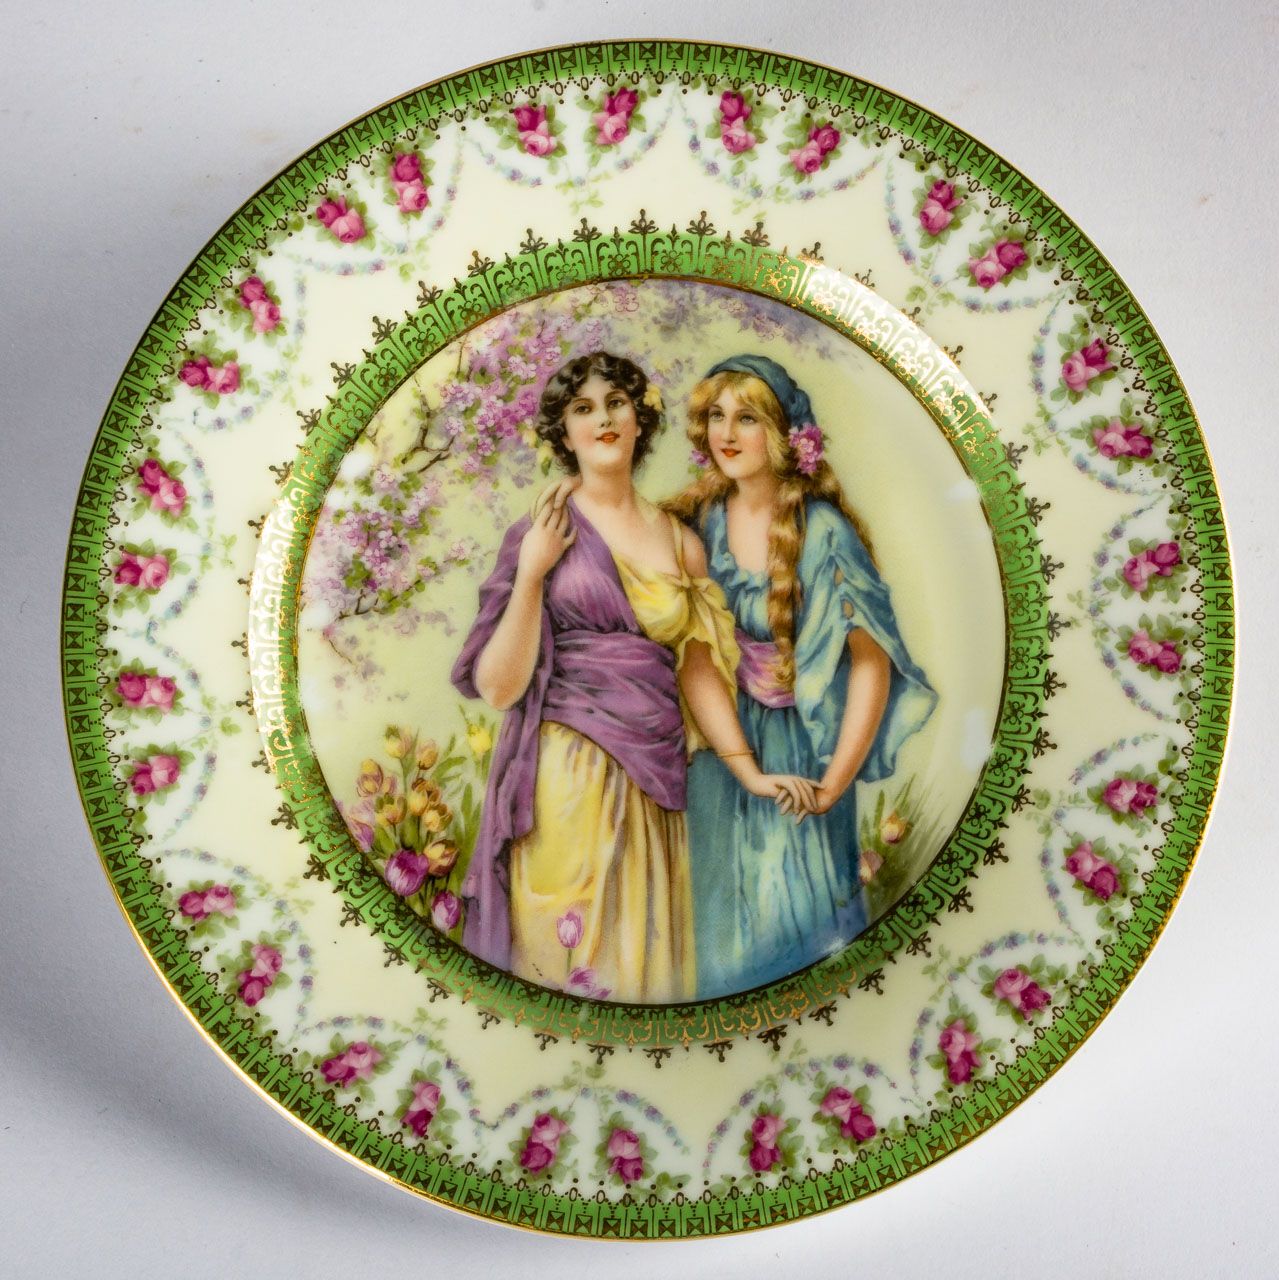 PORZELLAN-TELLER MIT ROMANTISCHER SZENE Fábrica de porcelana vienesa y Comte Har&hellip;